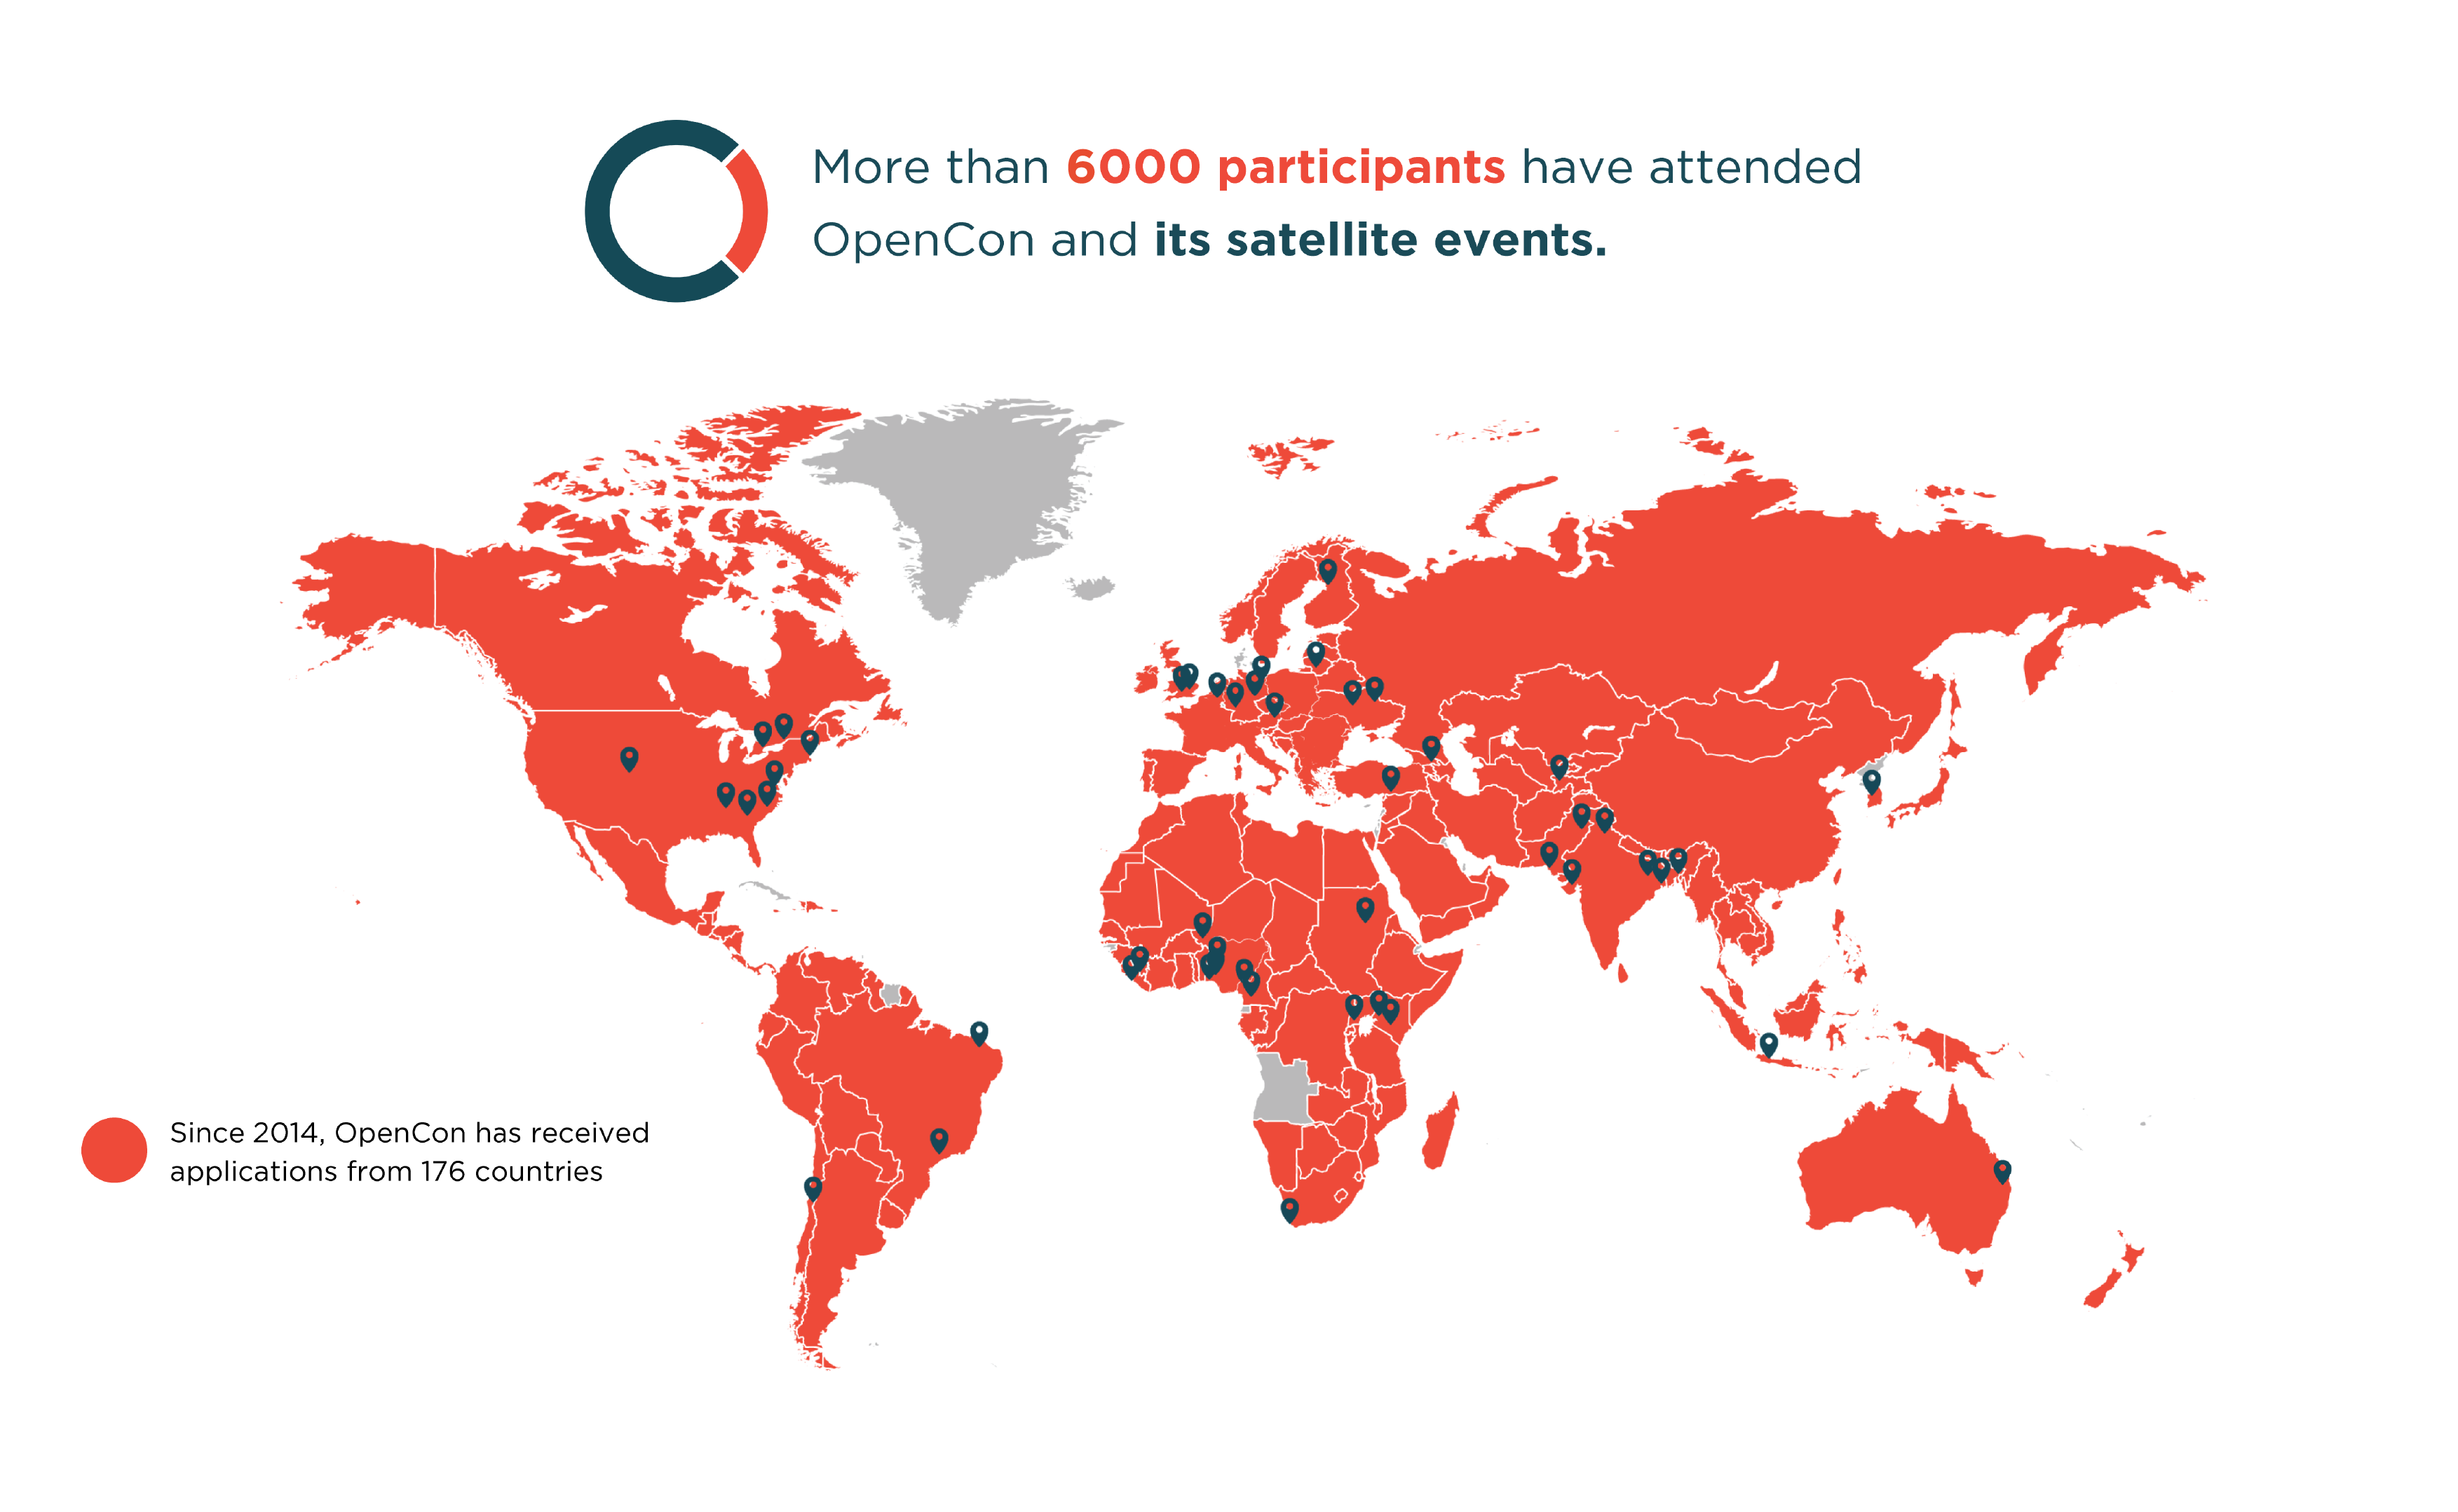 Image 2: Map showing origins of past OpenCon participants